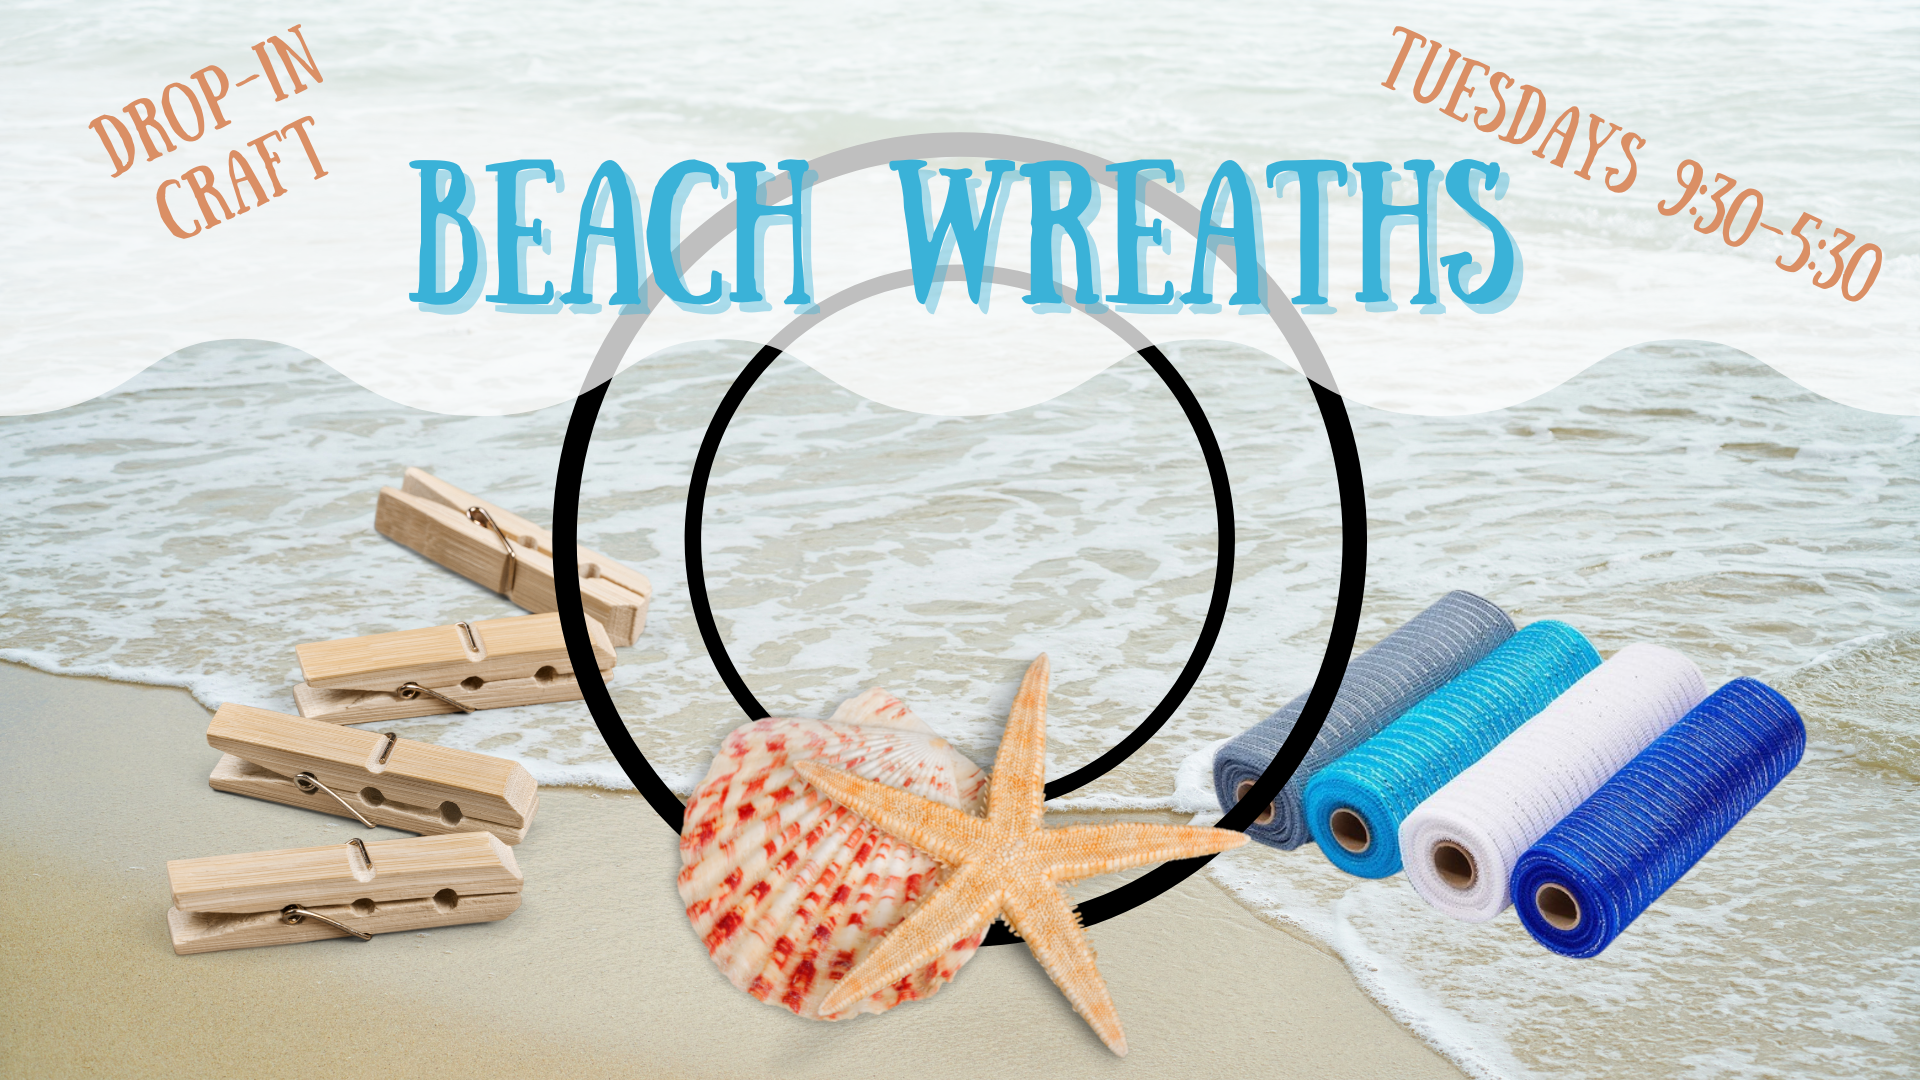 Drop-In Craft, Beach Wreaths, Tuesdays 9:30-5:30